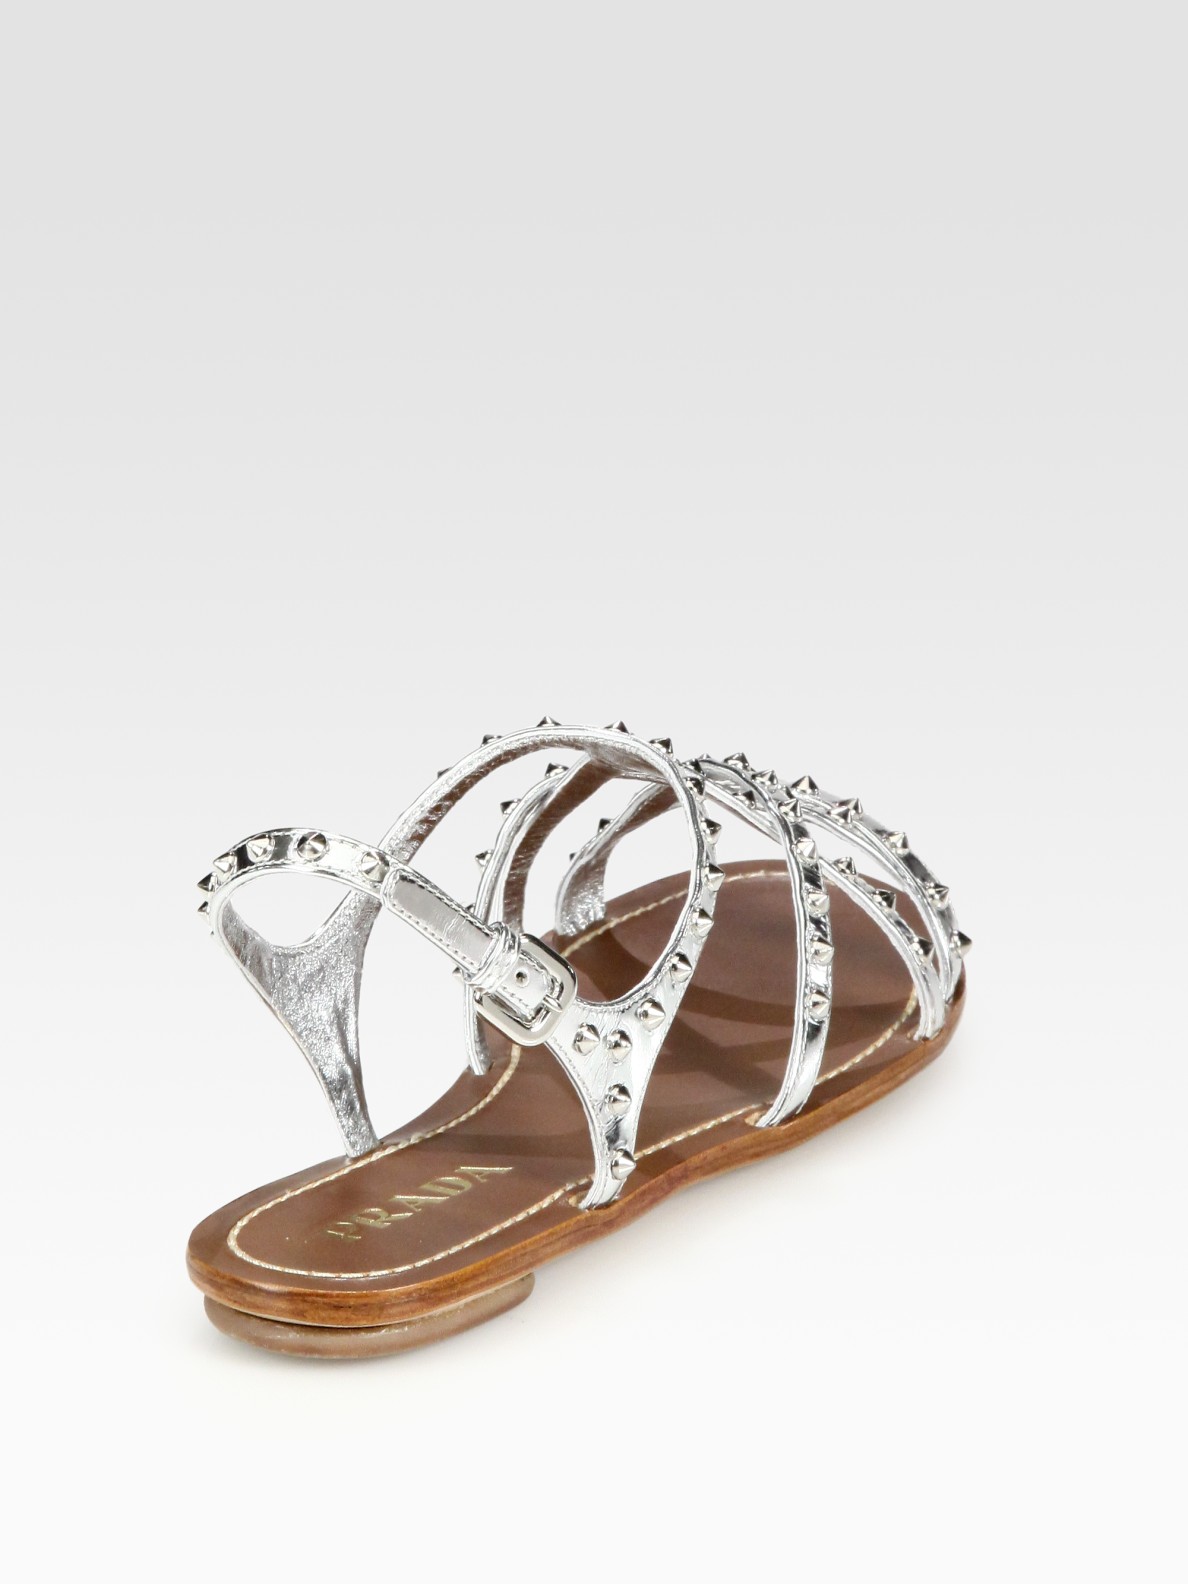 Lyst - Prada Metallic Leather Studded Flat Sandals in Metallic